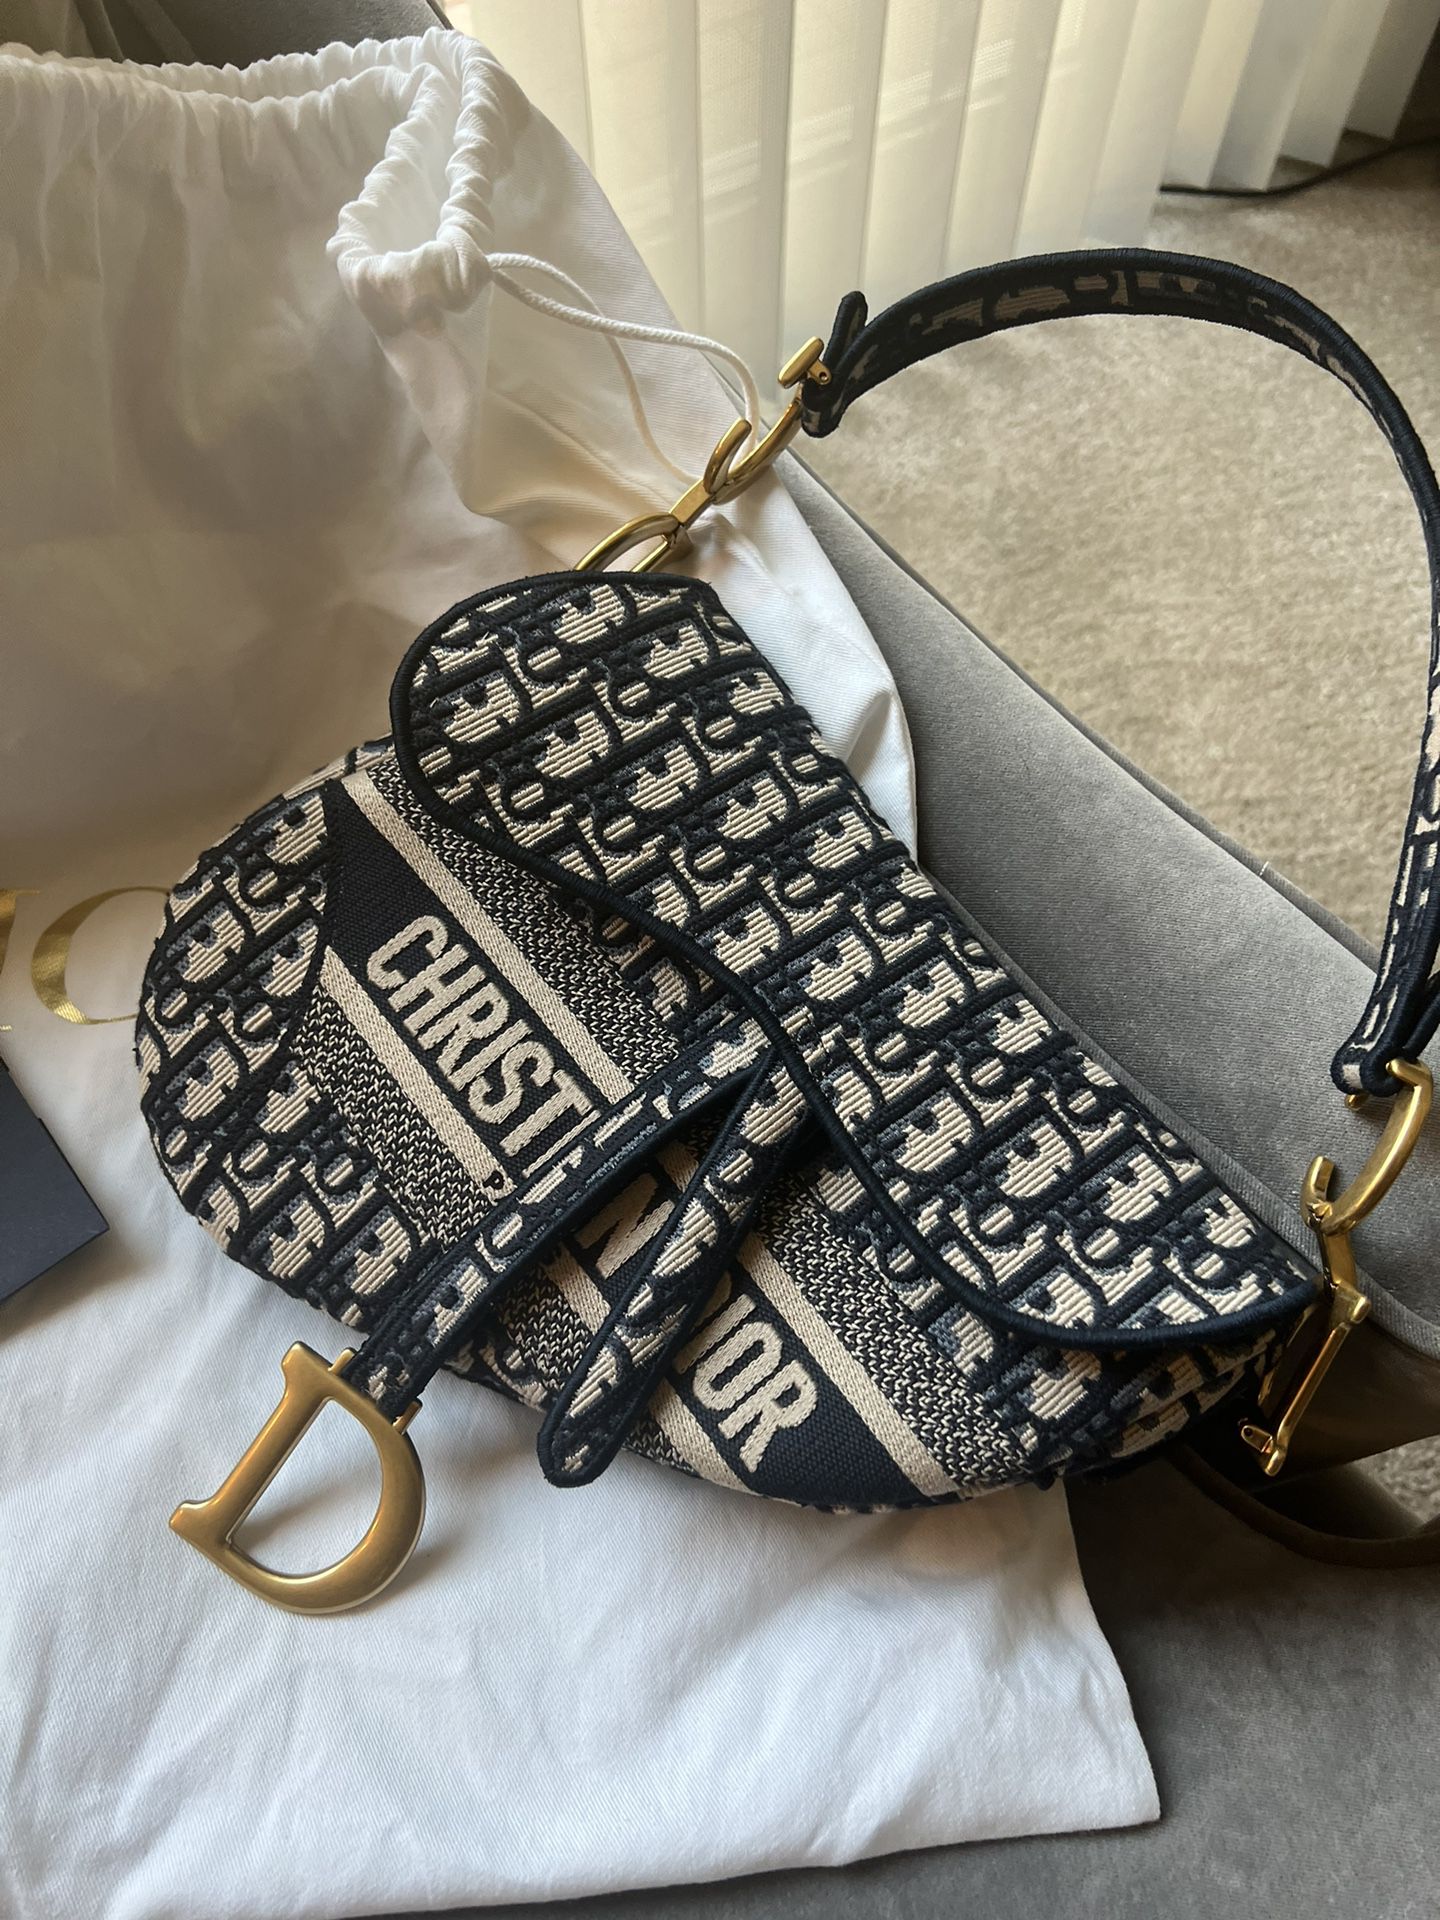 dior belt bag for Sale in North Haven, CT - OfferUp